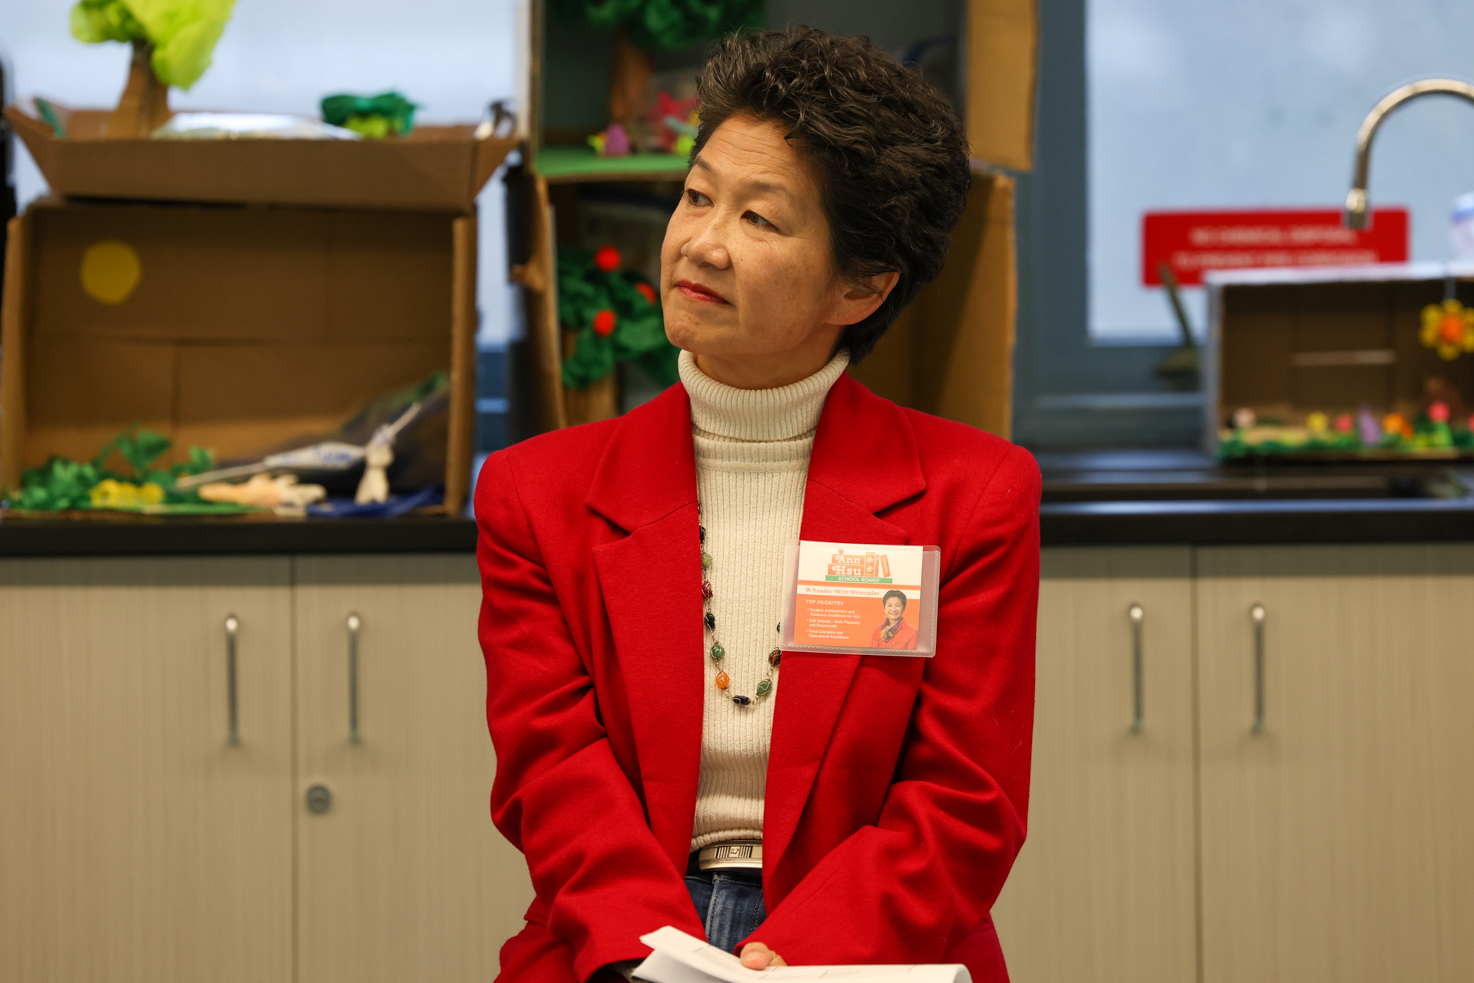 Ann Hsu’s School Board Seat in Peril